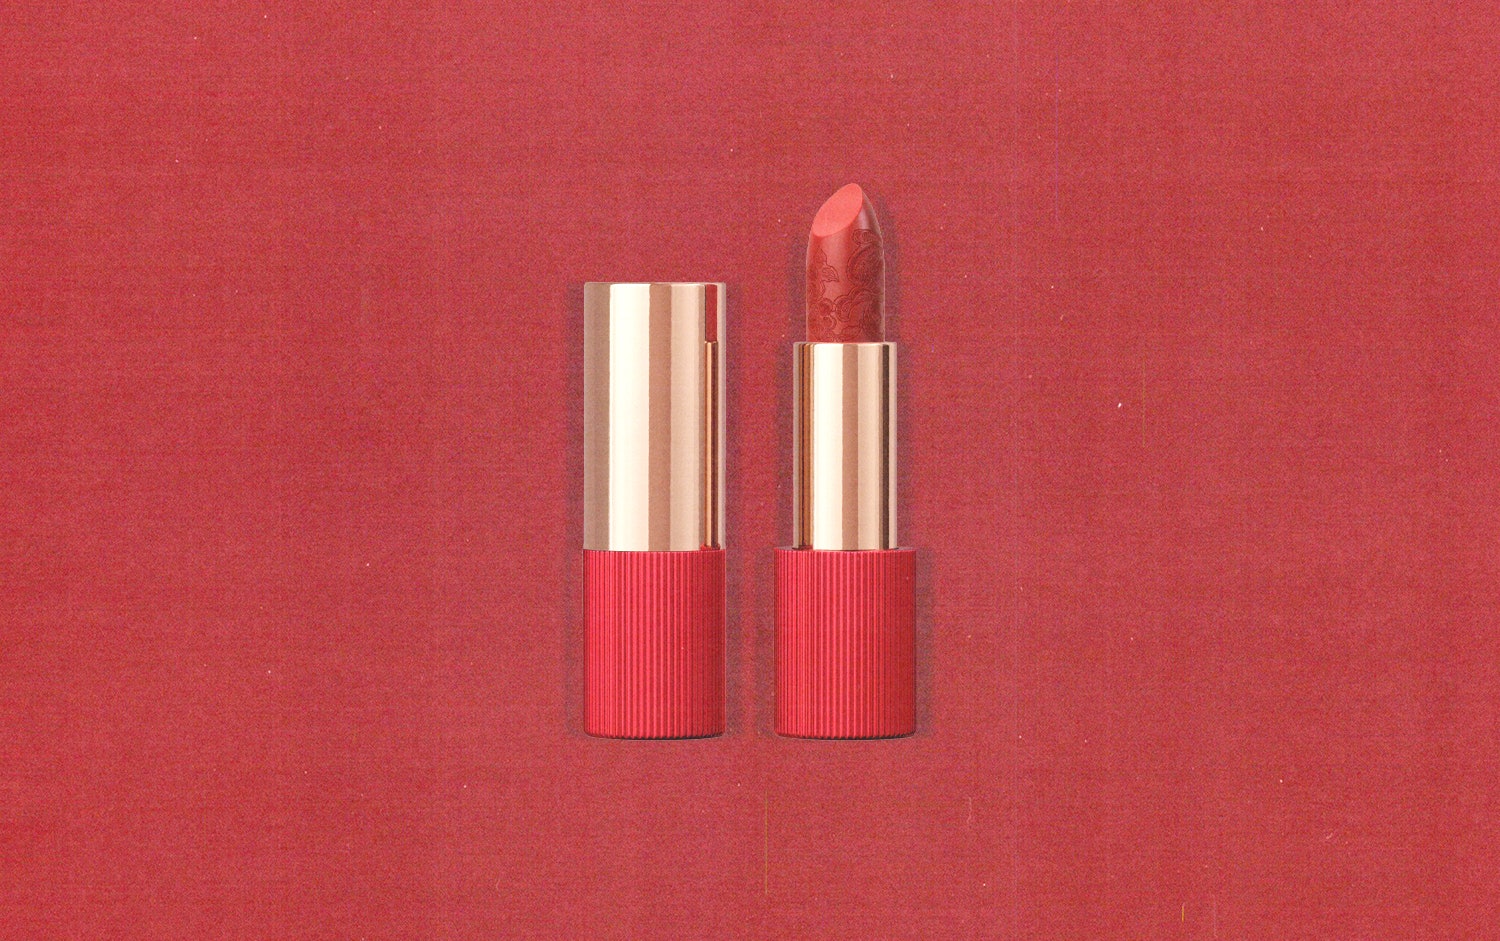 La Perla's Lipstick, Like Its Lingerie, is Sensual and Sumptuous